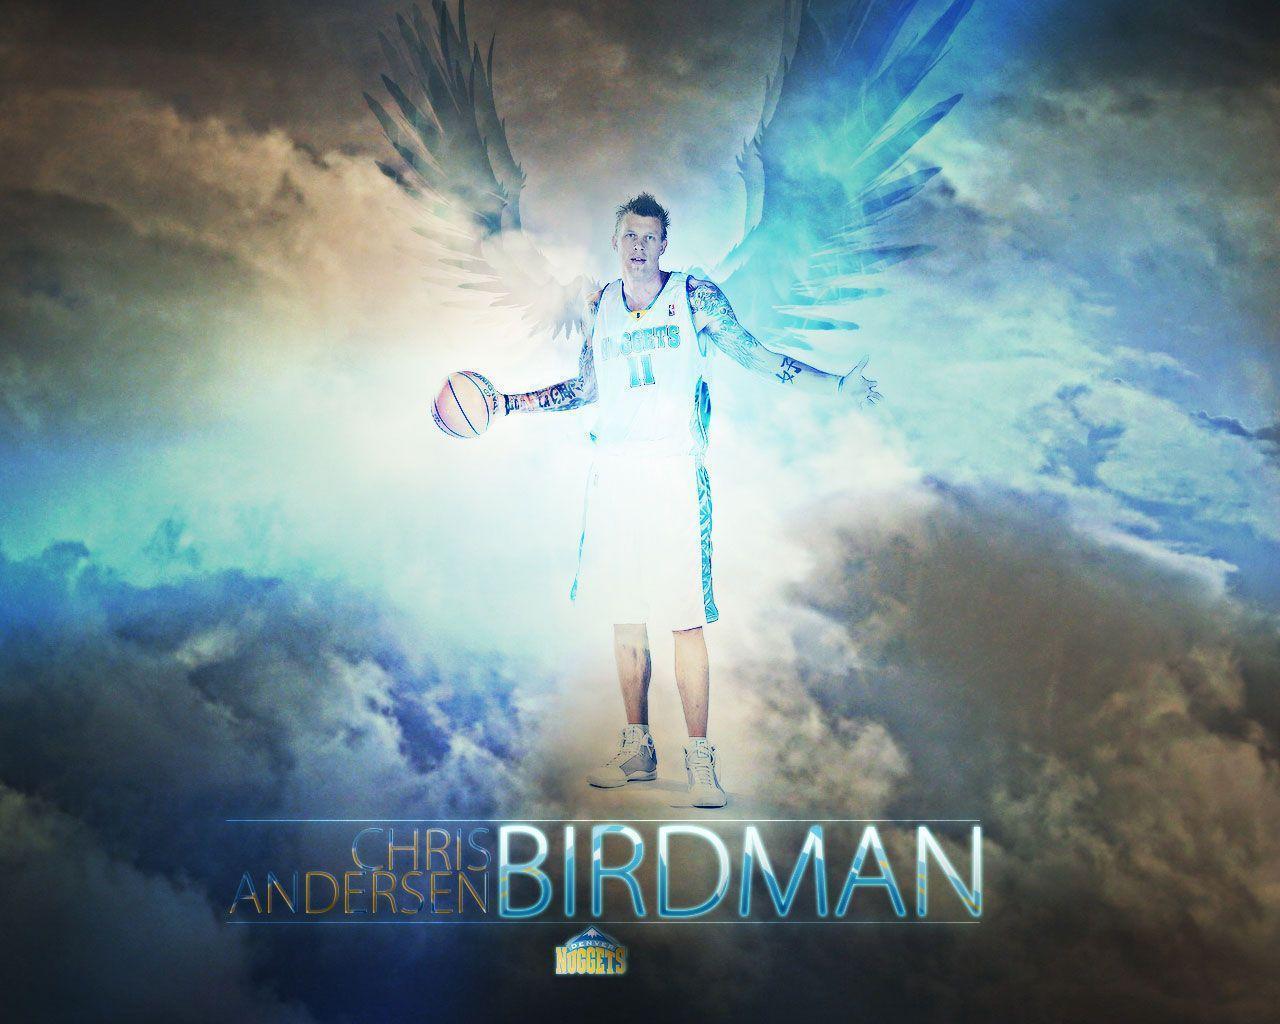 Chris Andersen 'Birdman' Wallpaper. Basketball Wallpaper at